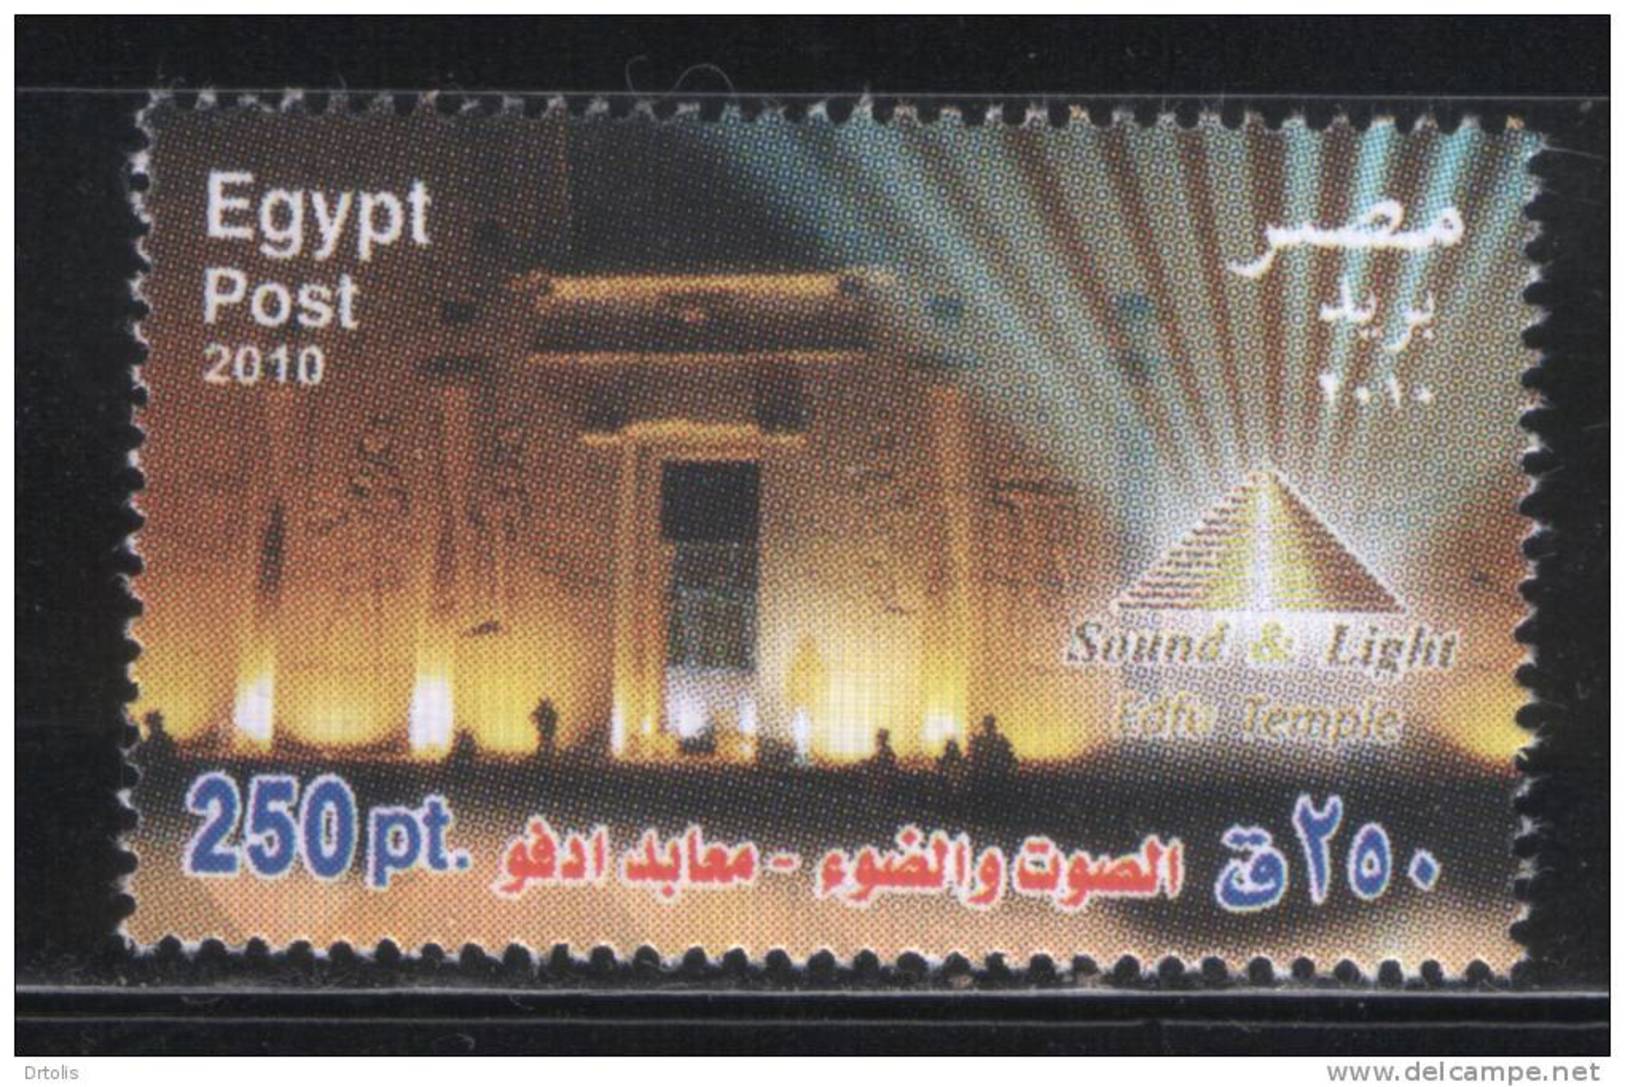 EGYPT / 2010 / SOUND & LIGHT / EDFU TEMPLE / EGYPTOLOGY / VF . - Neufs